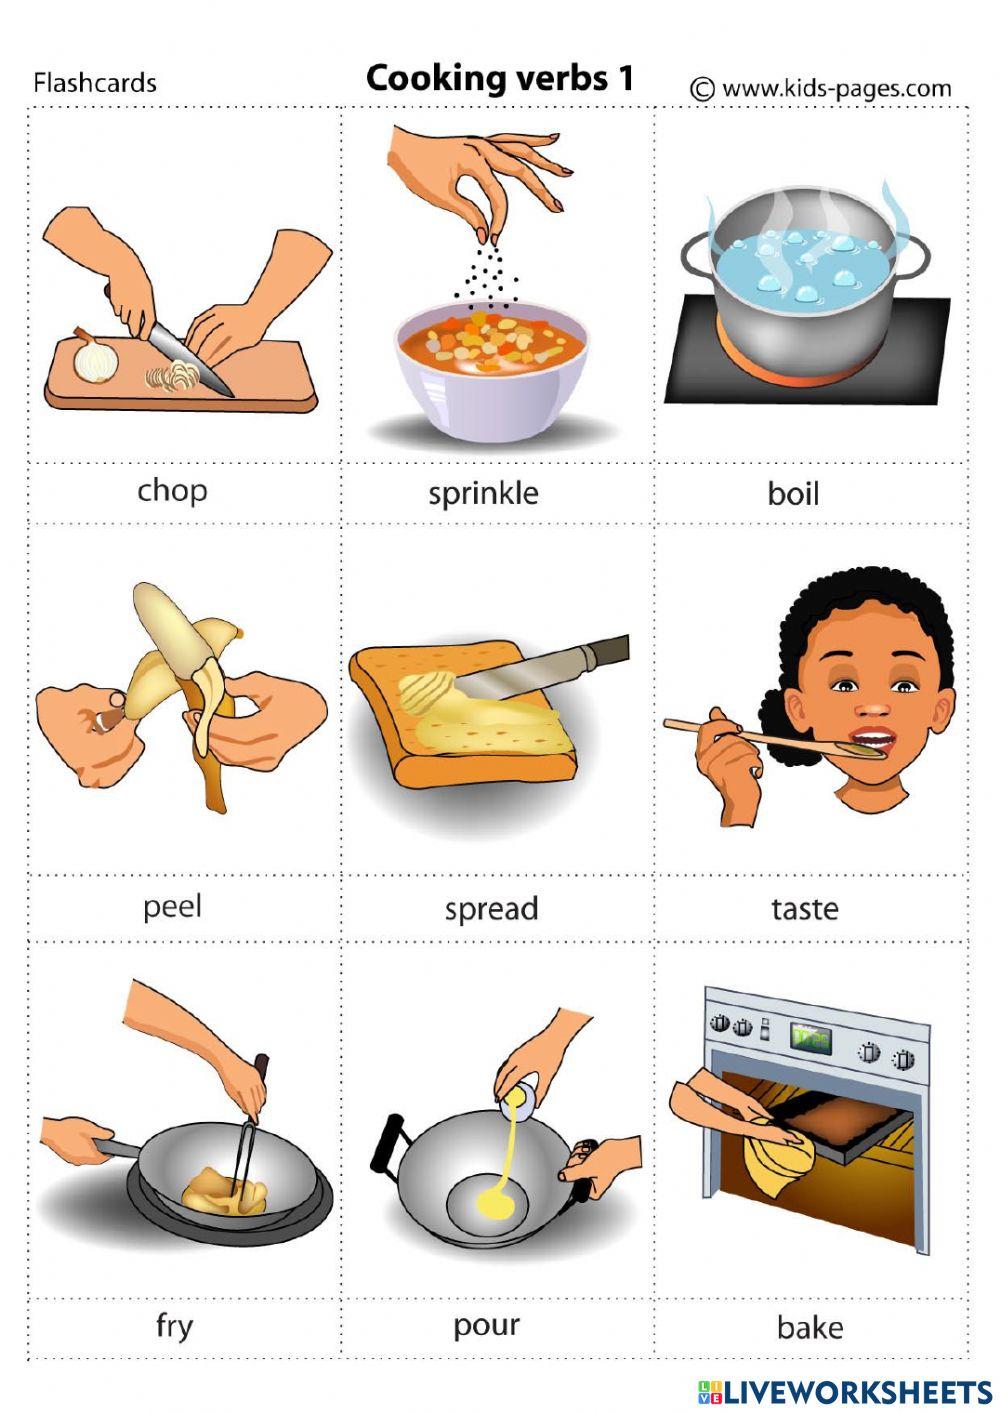 Do you like to cook. Cooking verbs for Kids. Глаголы готовки на английском. Приготовление еды на английском языке. Глаголы приготовления пищи на английском.